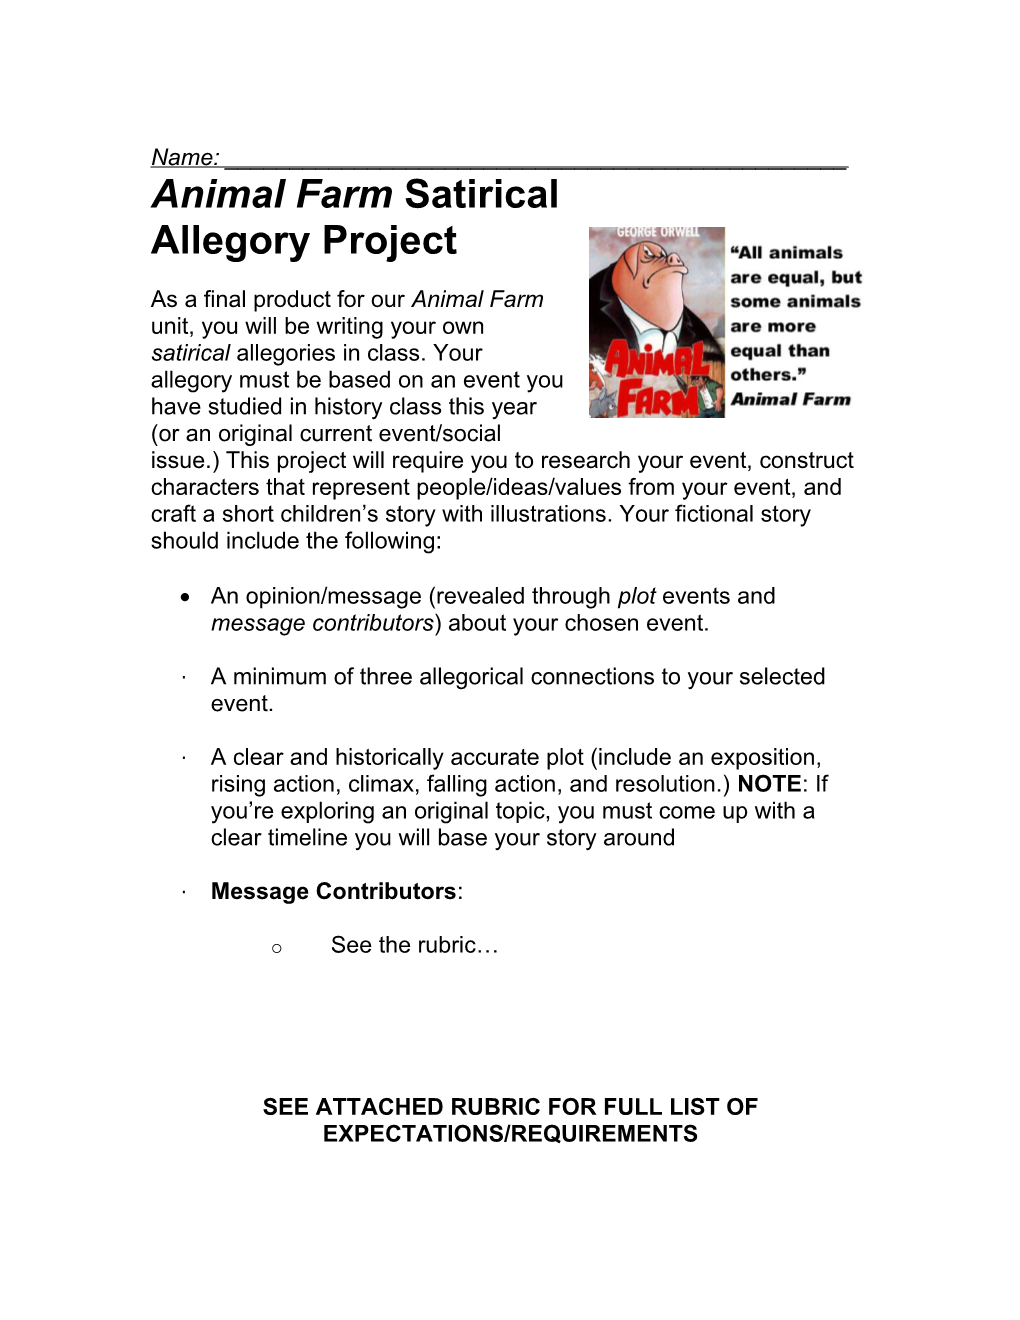 Animal Farmsatirical Allegory Project